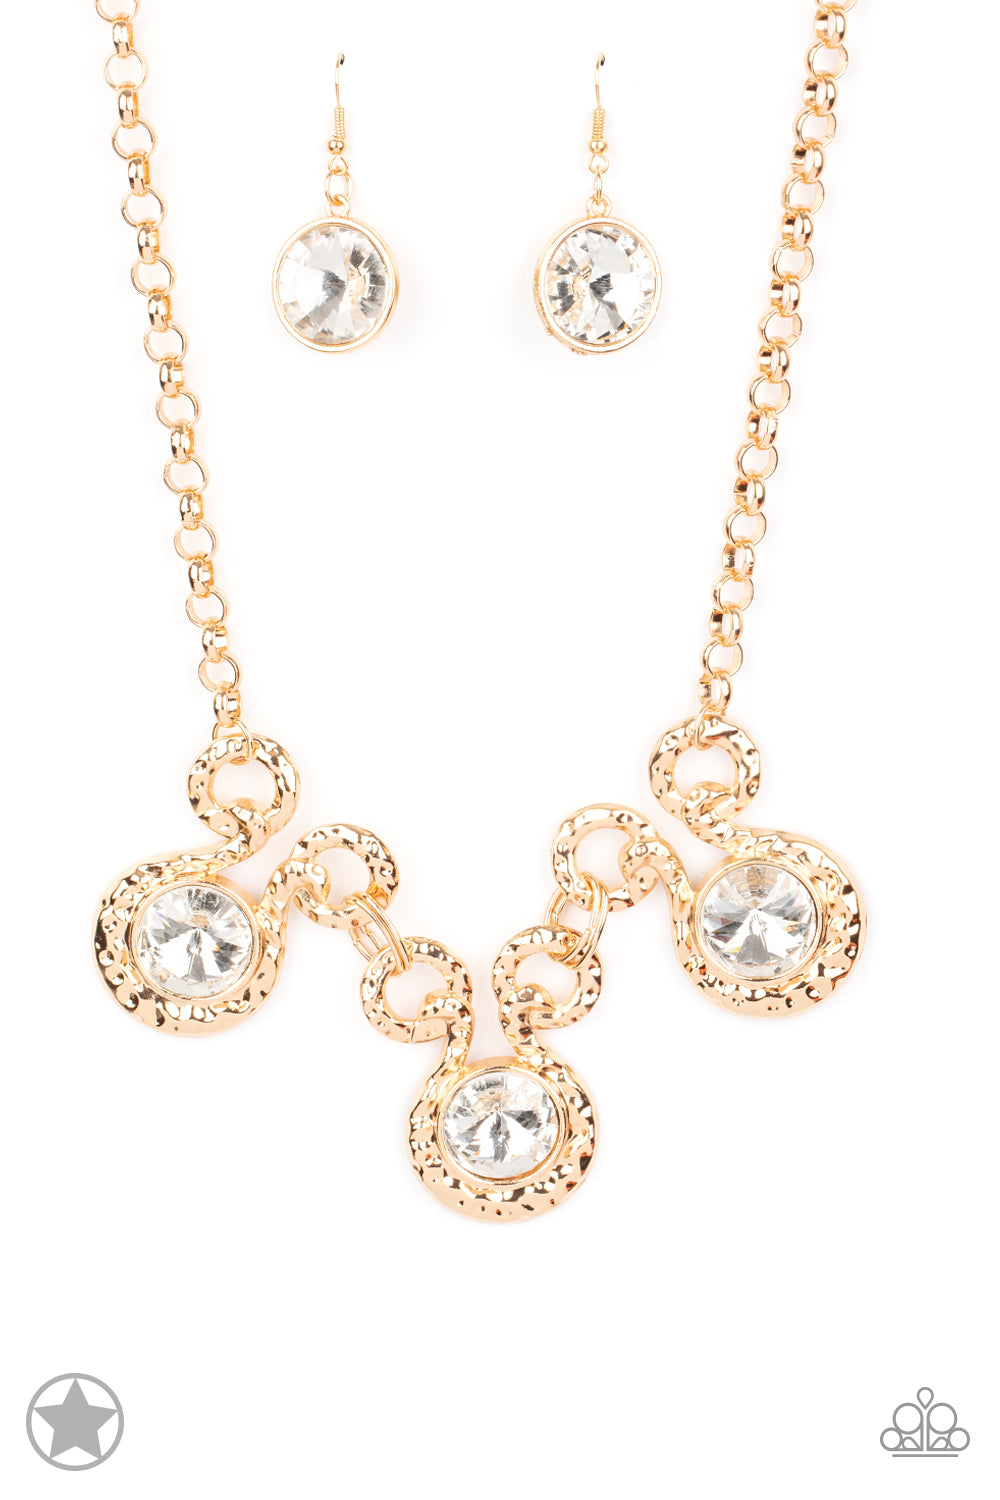 Hypnotized - Gold Bling Necklace